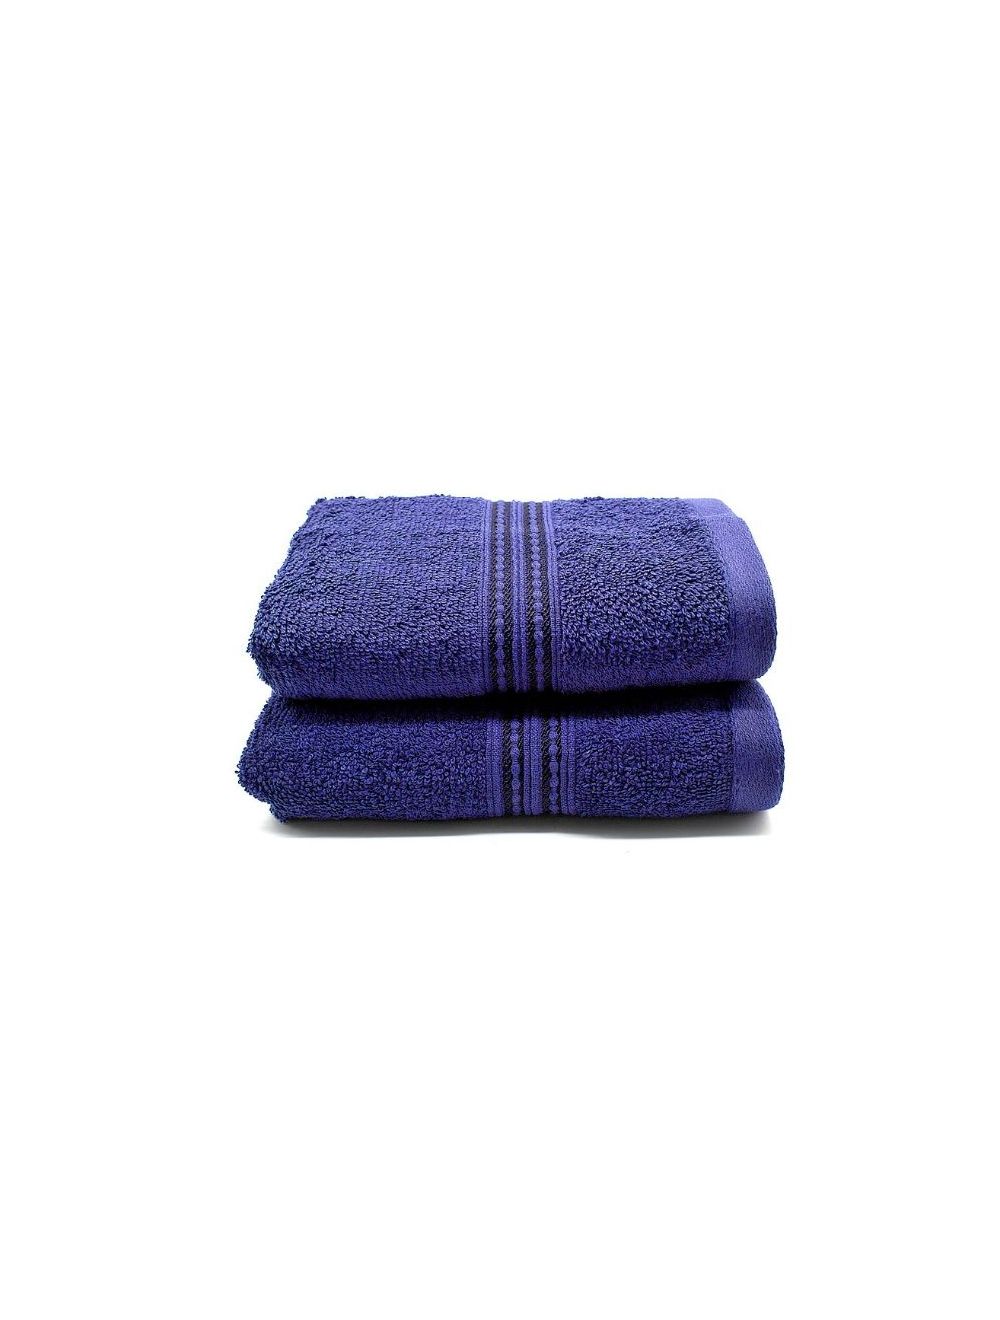 Rahalife 100% Cotton 2-Piece Hand Towel Set, Classic Collection, Blue-14RLHT024